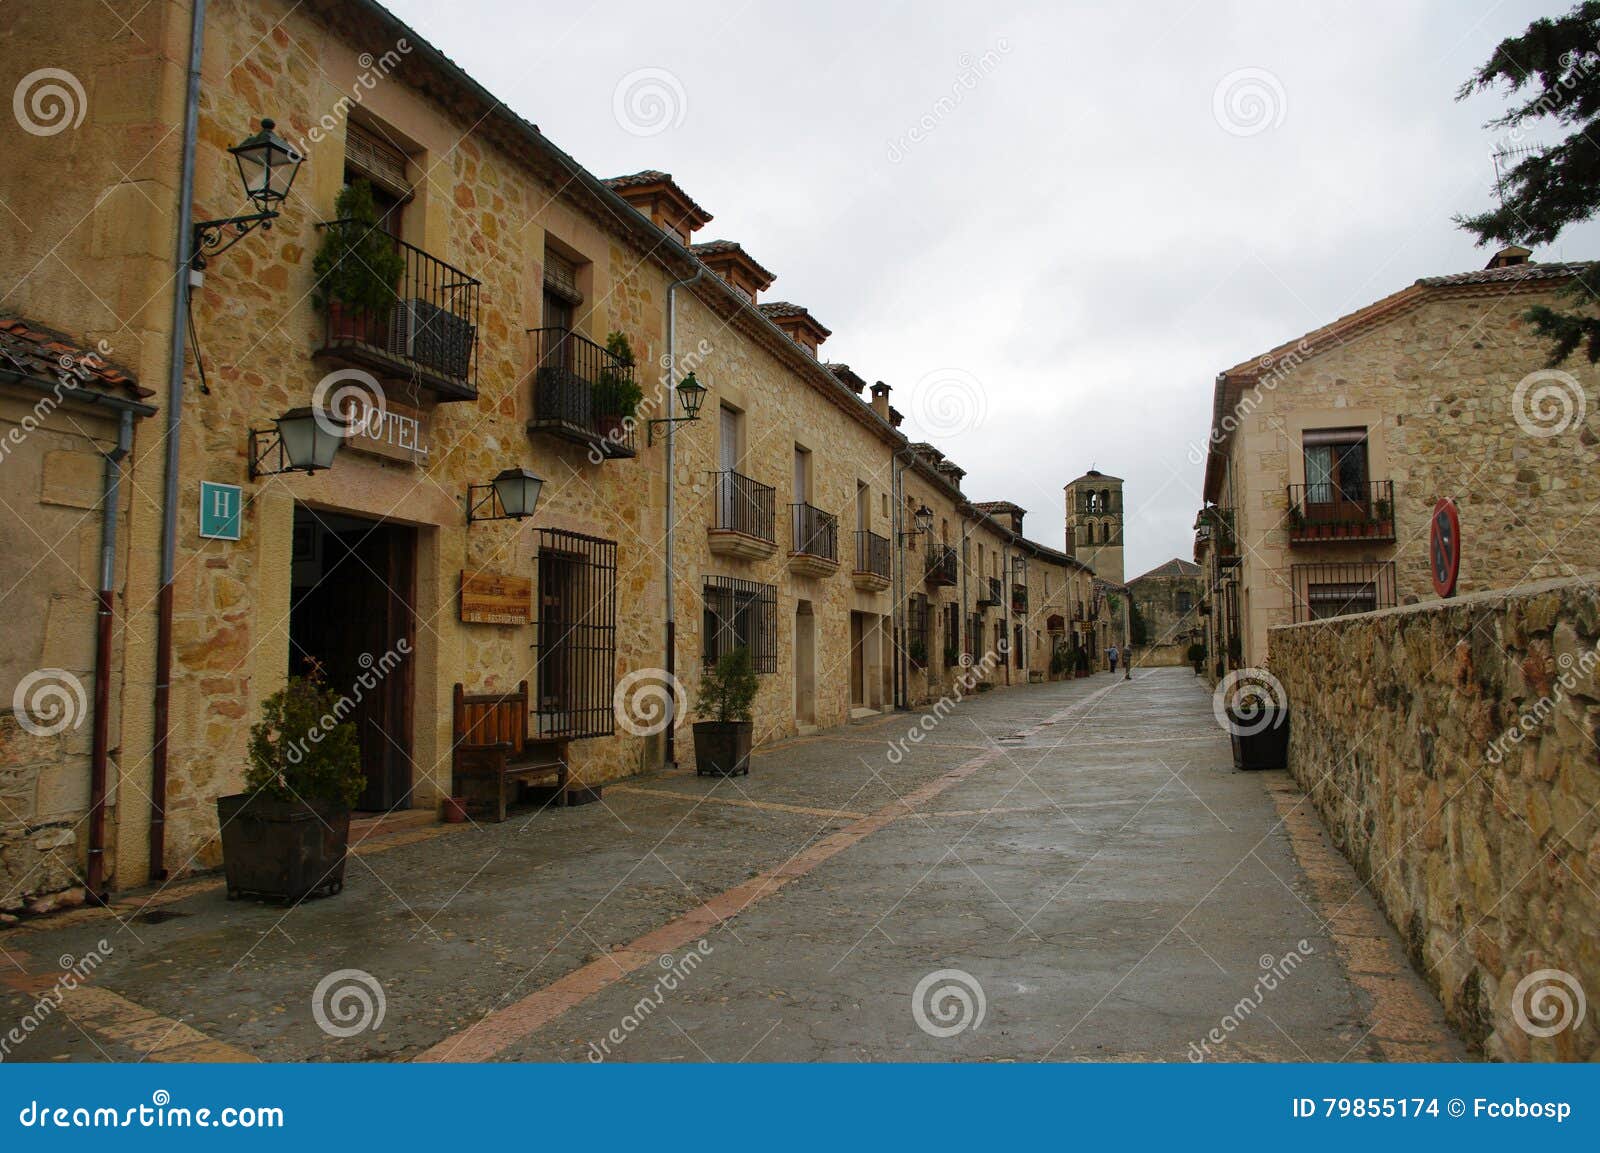 pedraza medieval village, spain